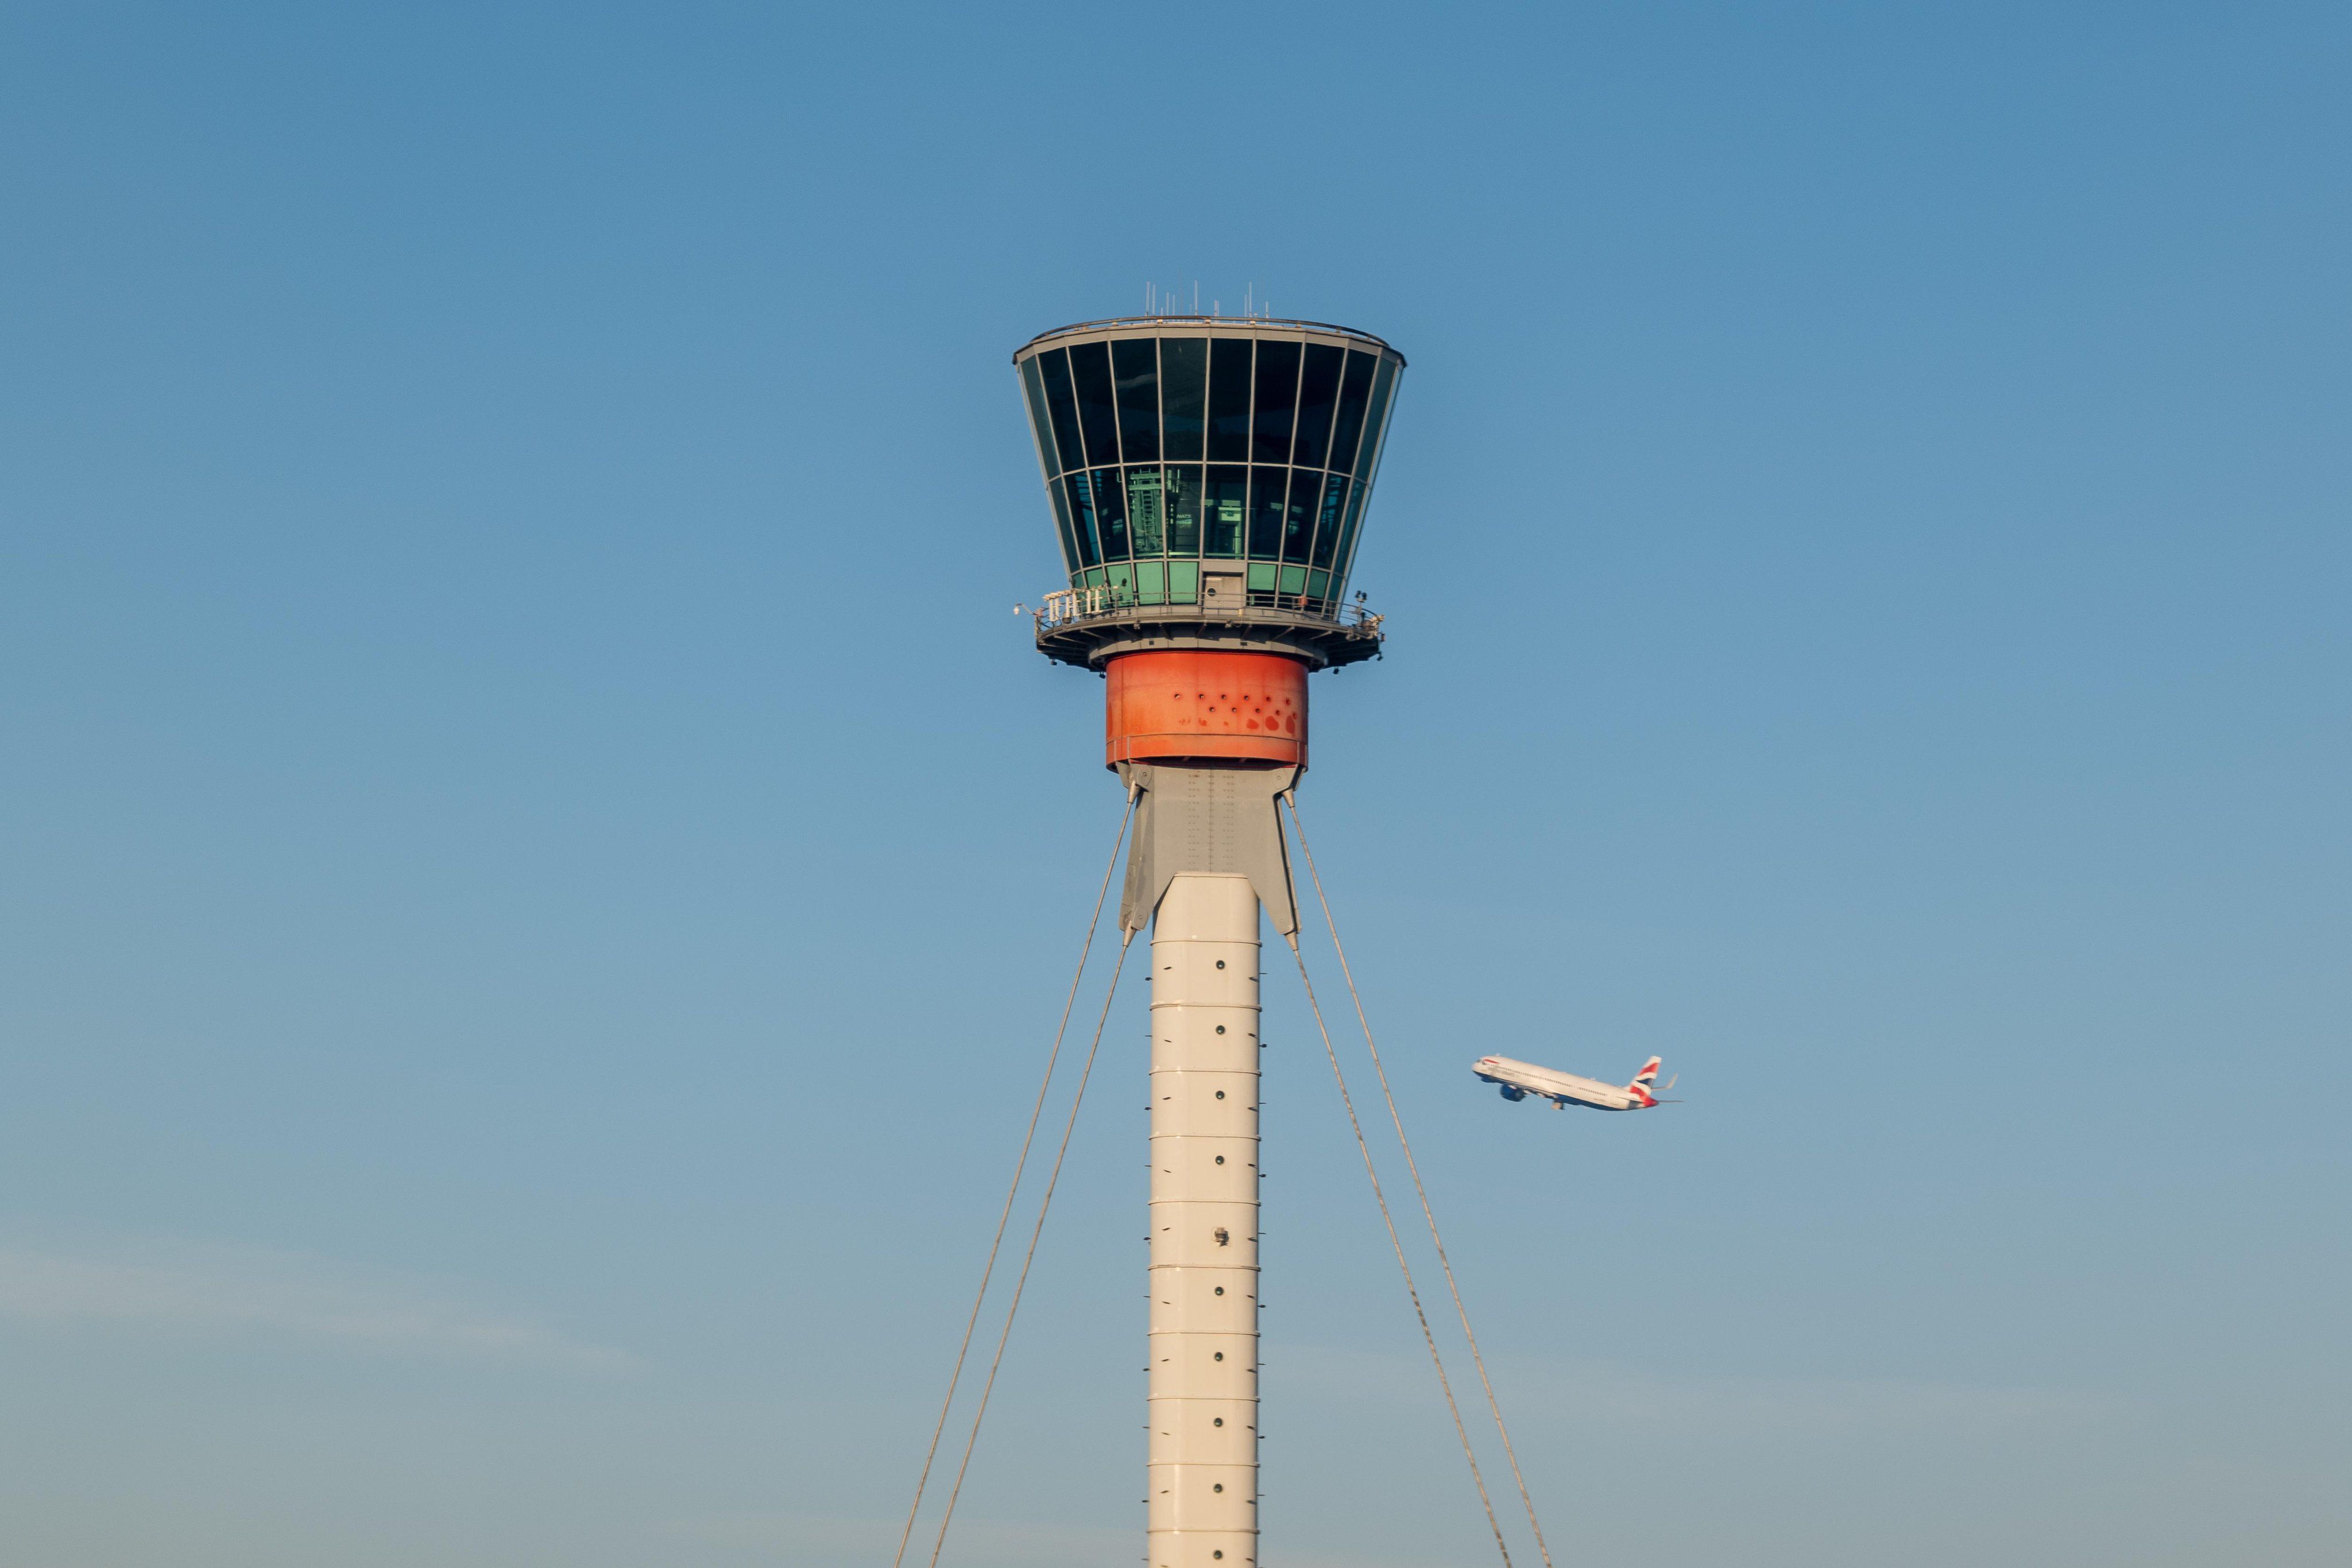 Heathrow Airport ATC Tower.